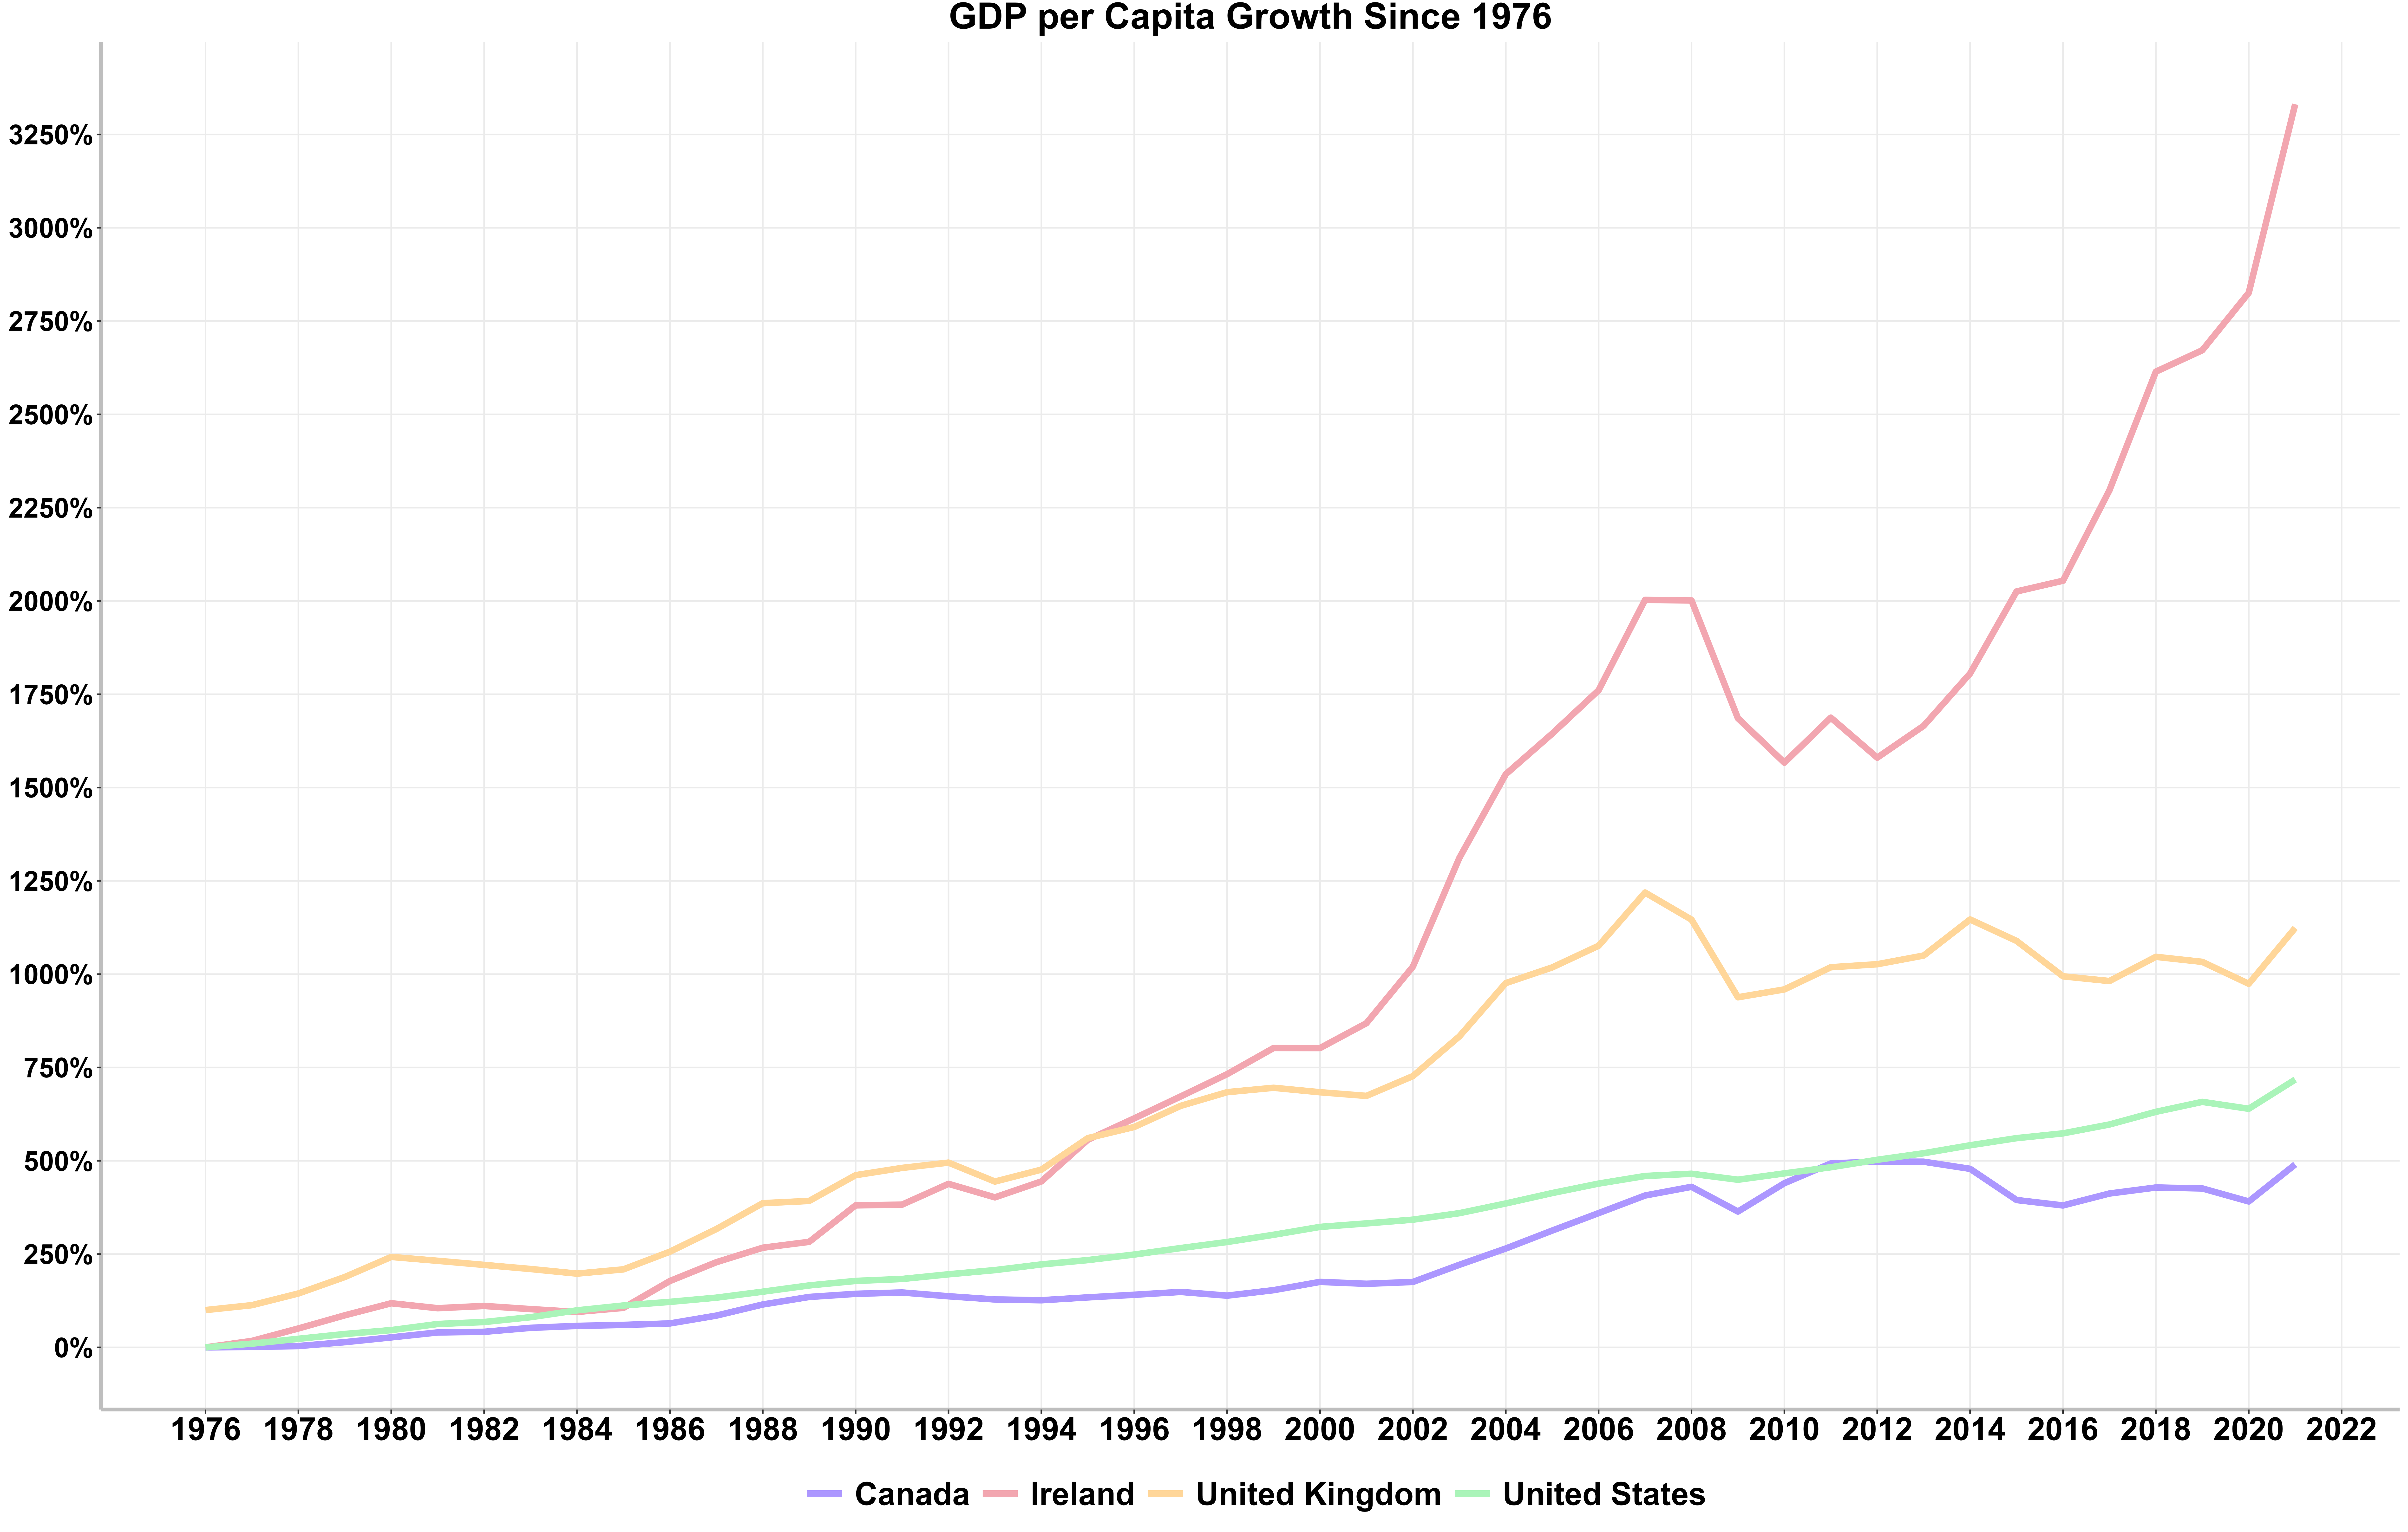 GDP per capita growth since 1976